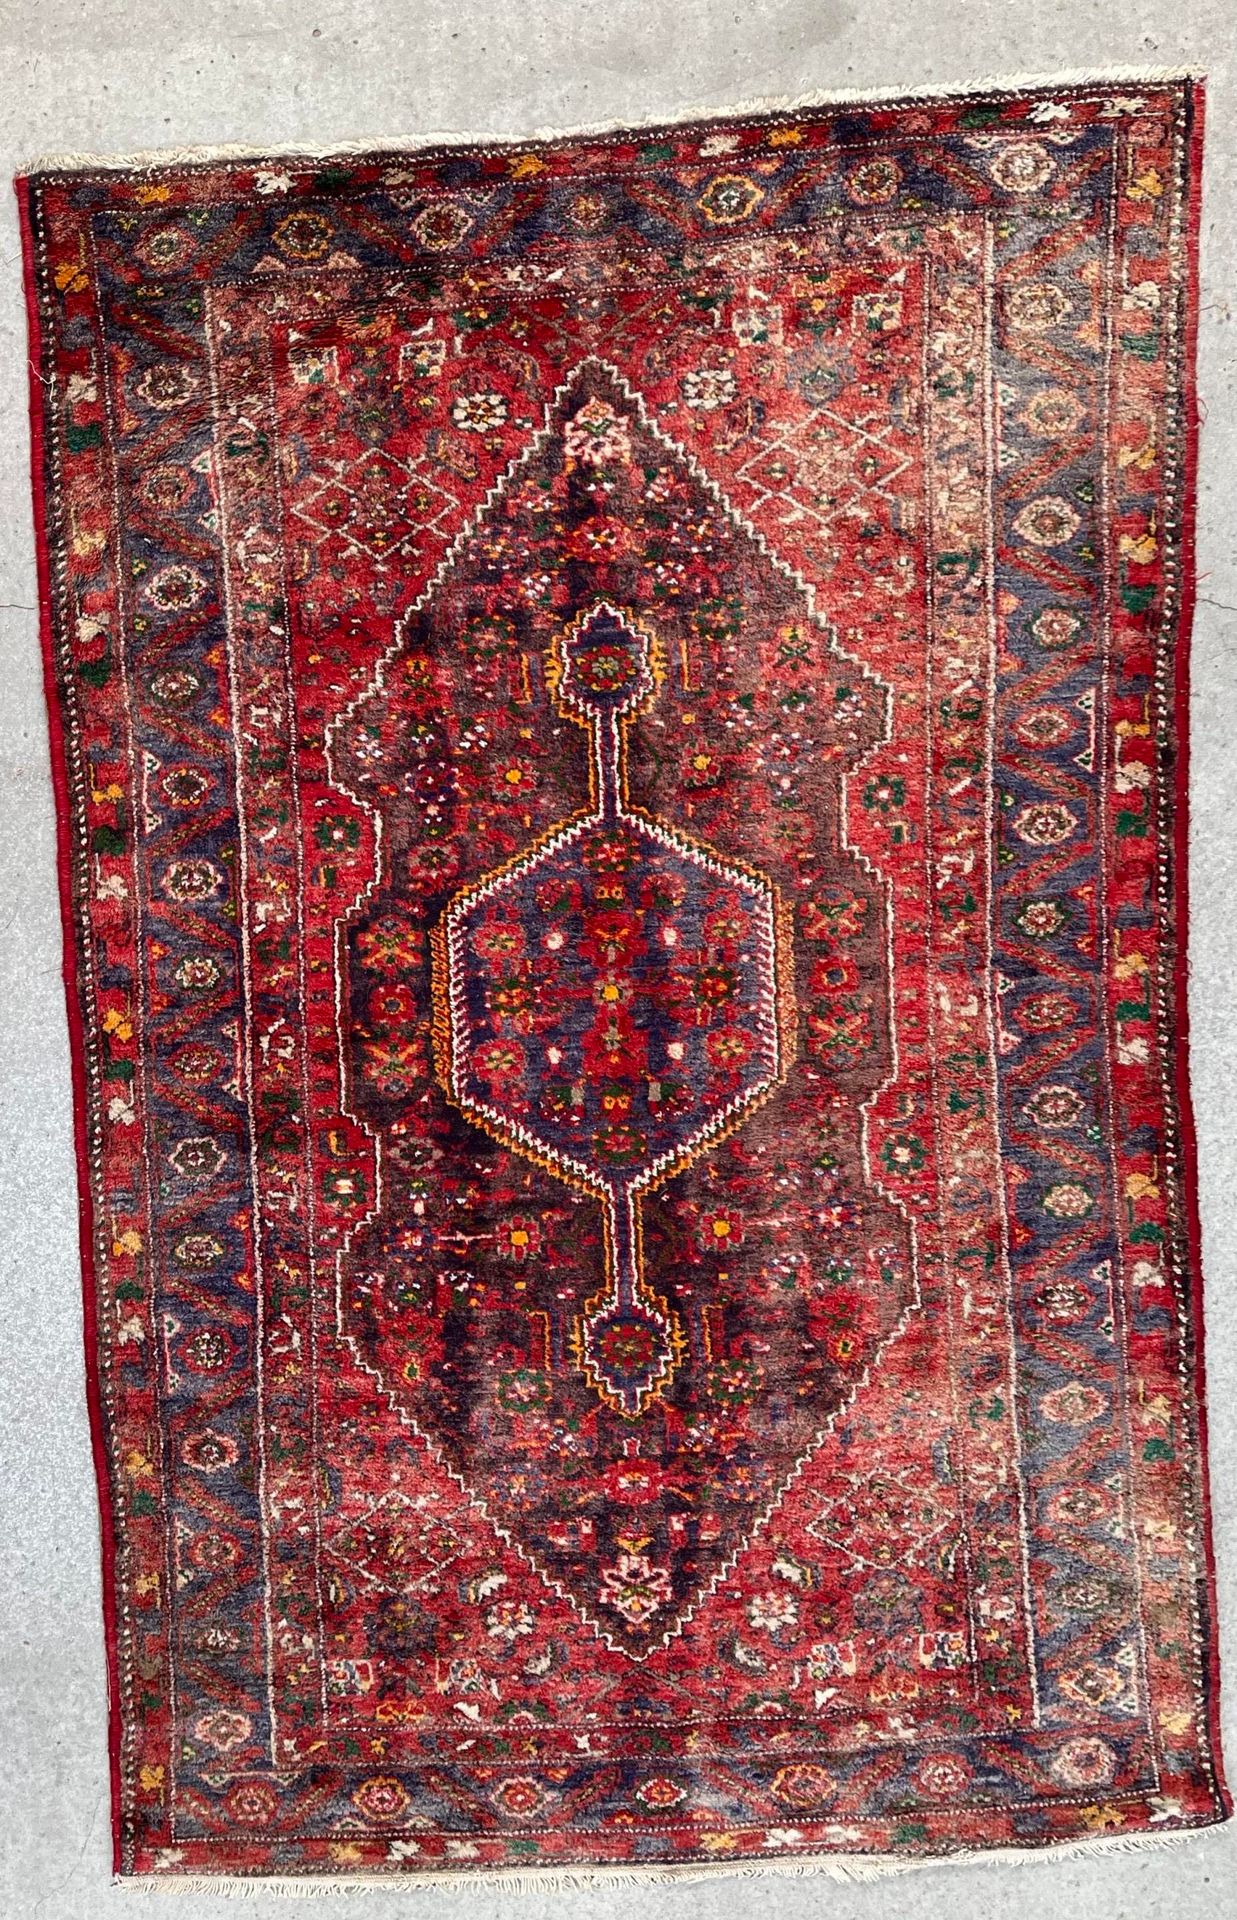 Null 羊毛地毯，中央装饰为红场上的小奖章，三层边框为几何图案

190厘米 x 128厘米

磨损的